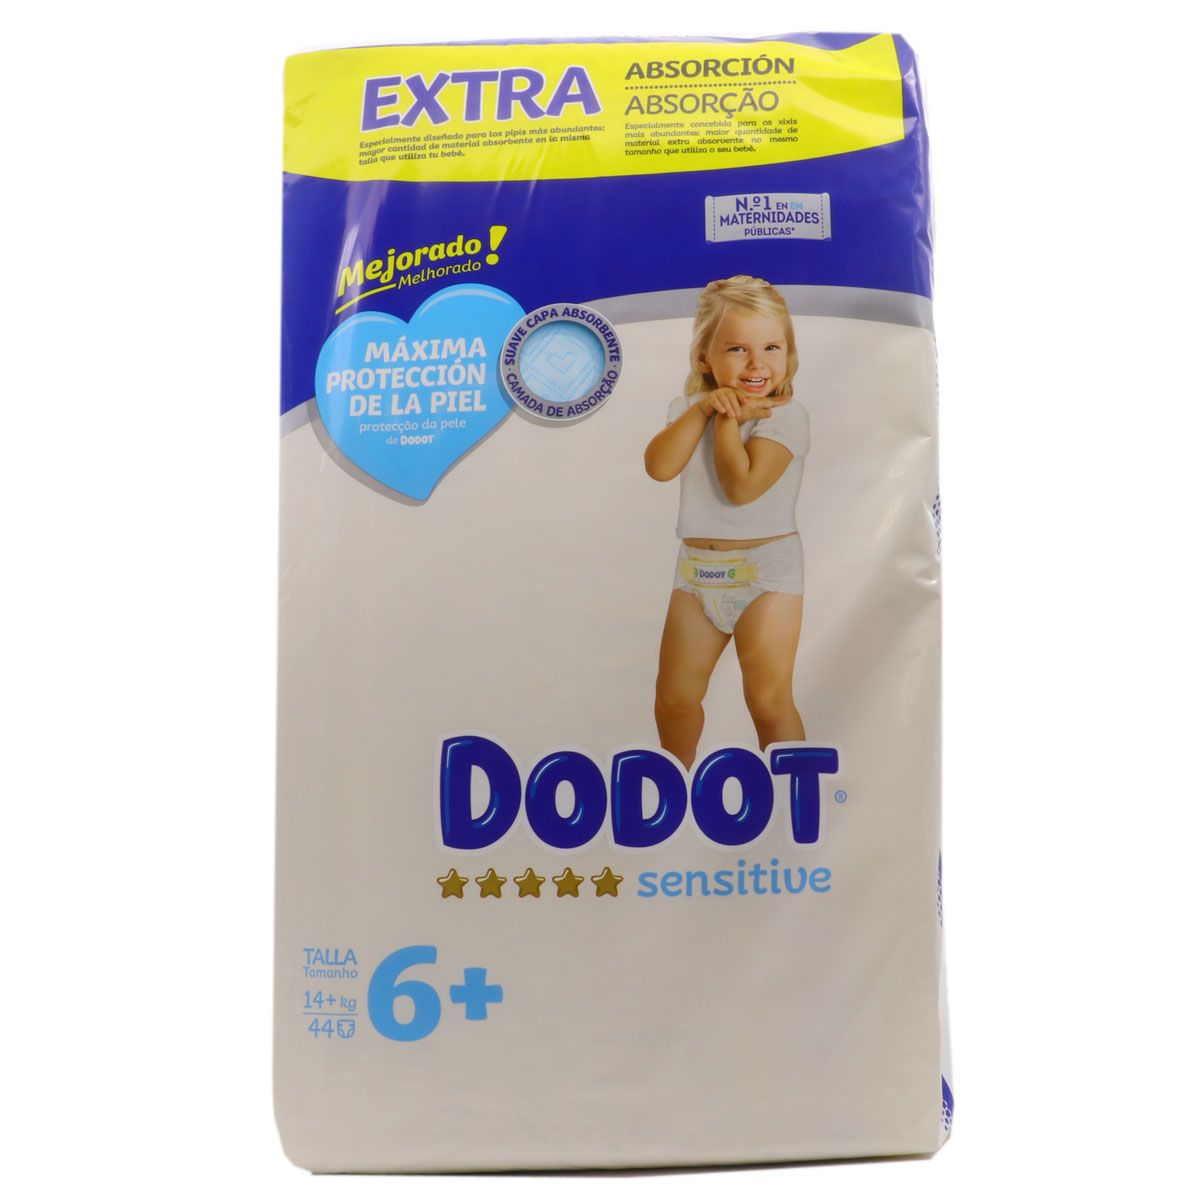 Dodot Sensitive Diaper Size 6+ 44 units